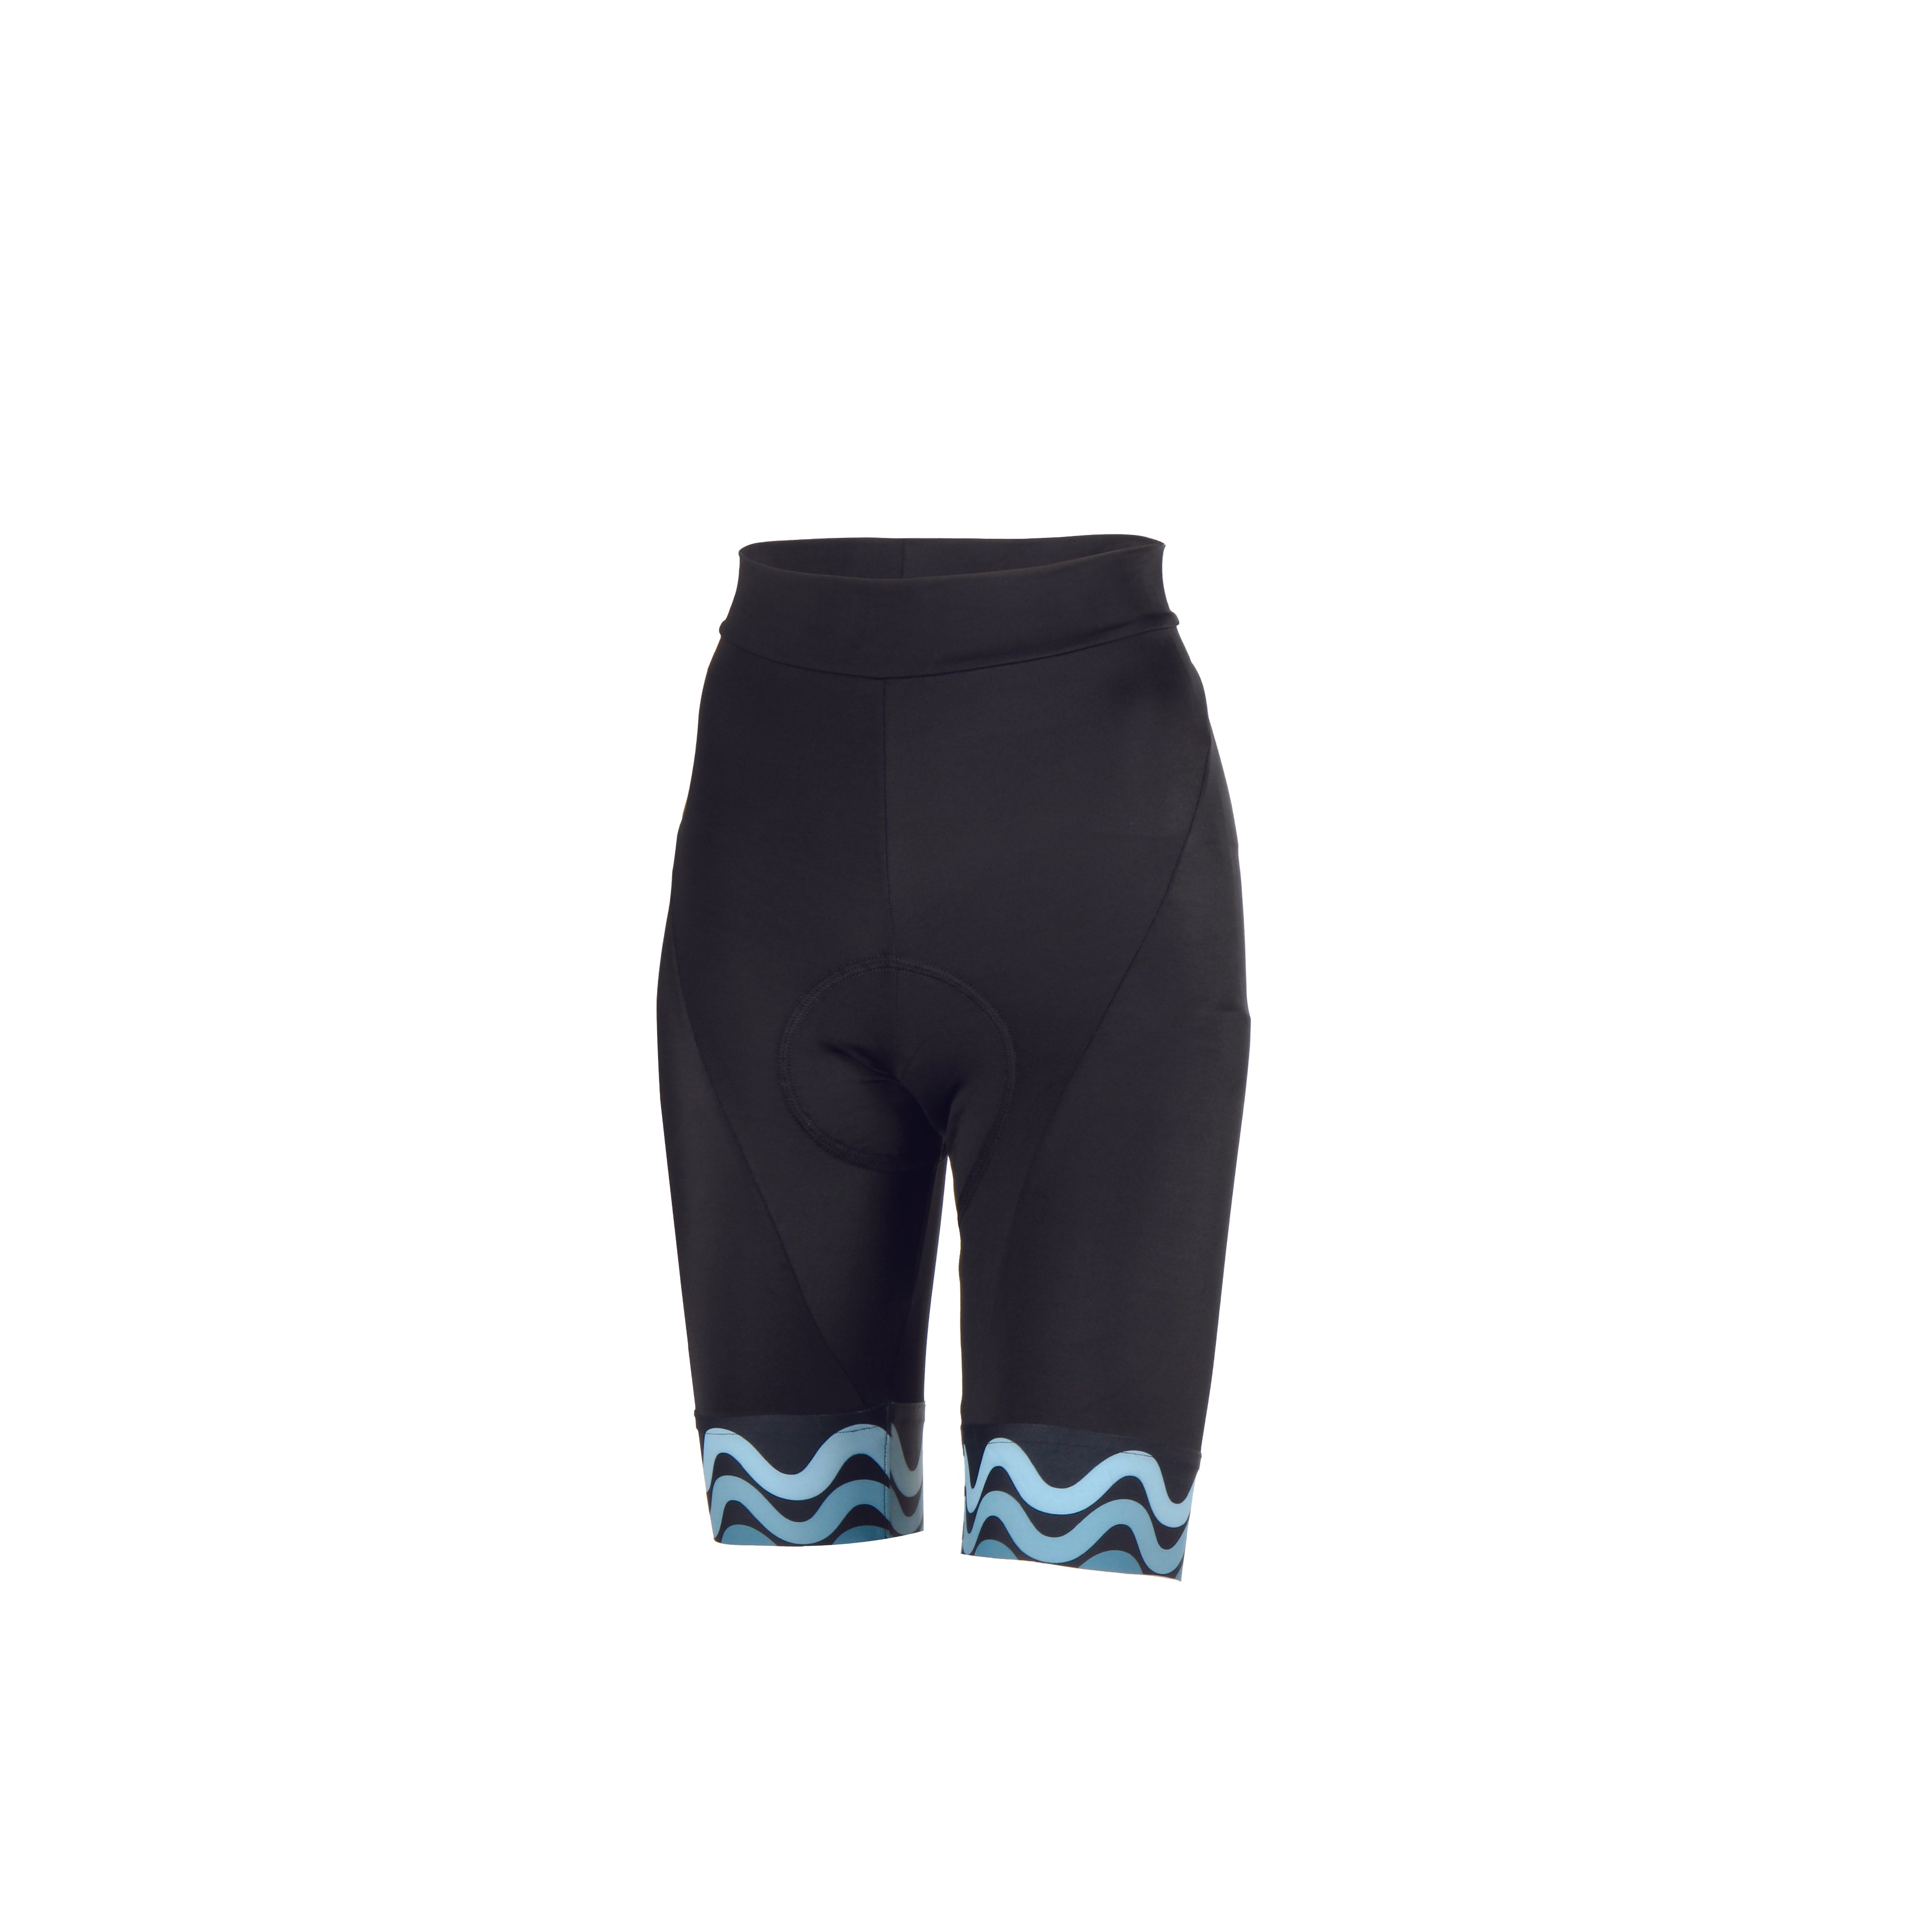 Pantaloni Scurti Dama Ciclism Wave Negru-Albastru